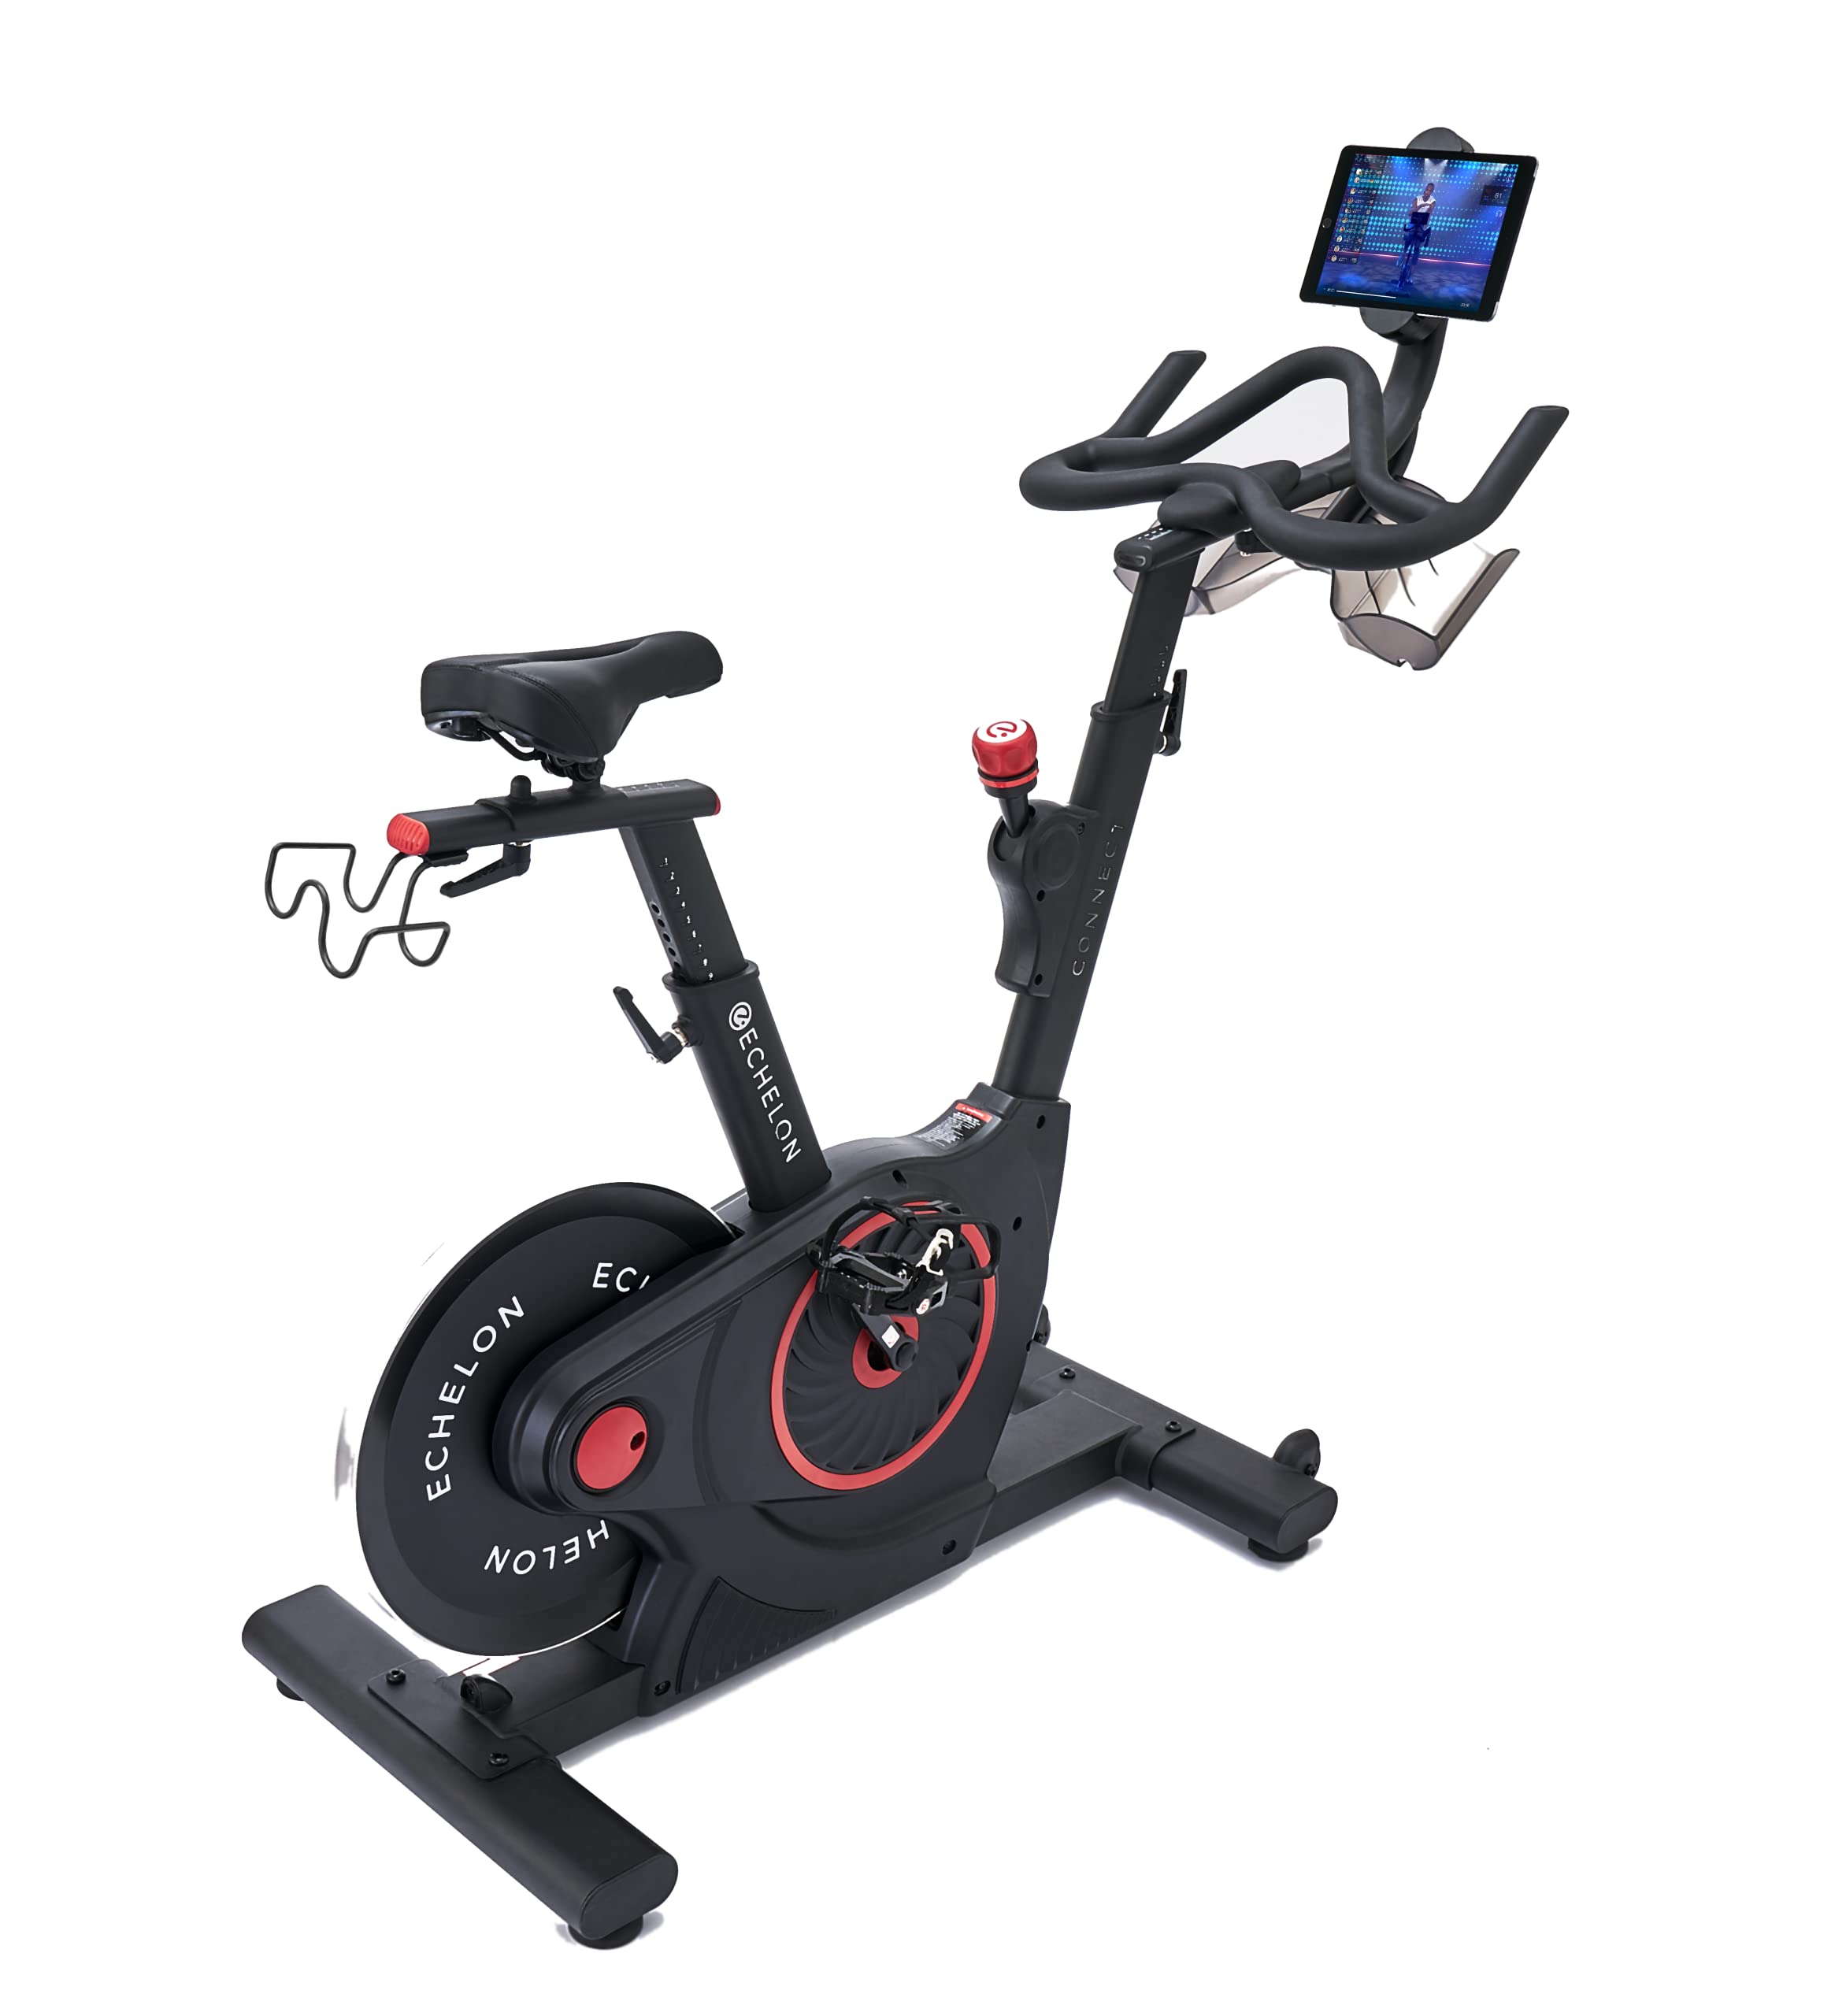 Echelon EX5 Smart Connect Fitness Bike, Black $448.75 + Free Shipping